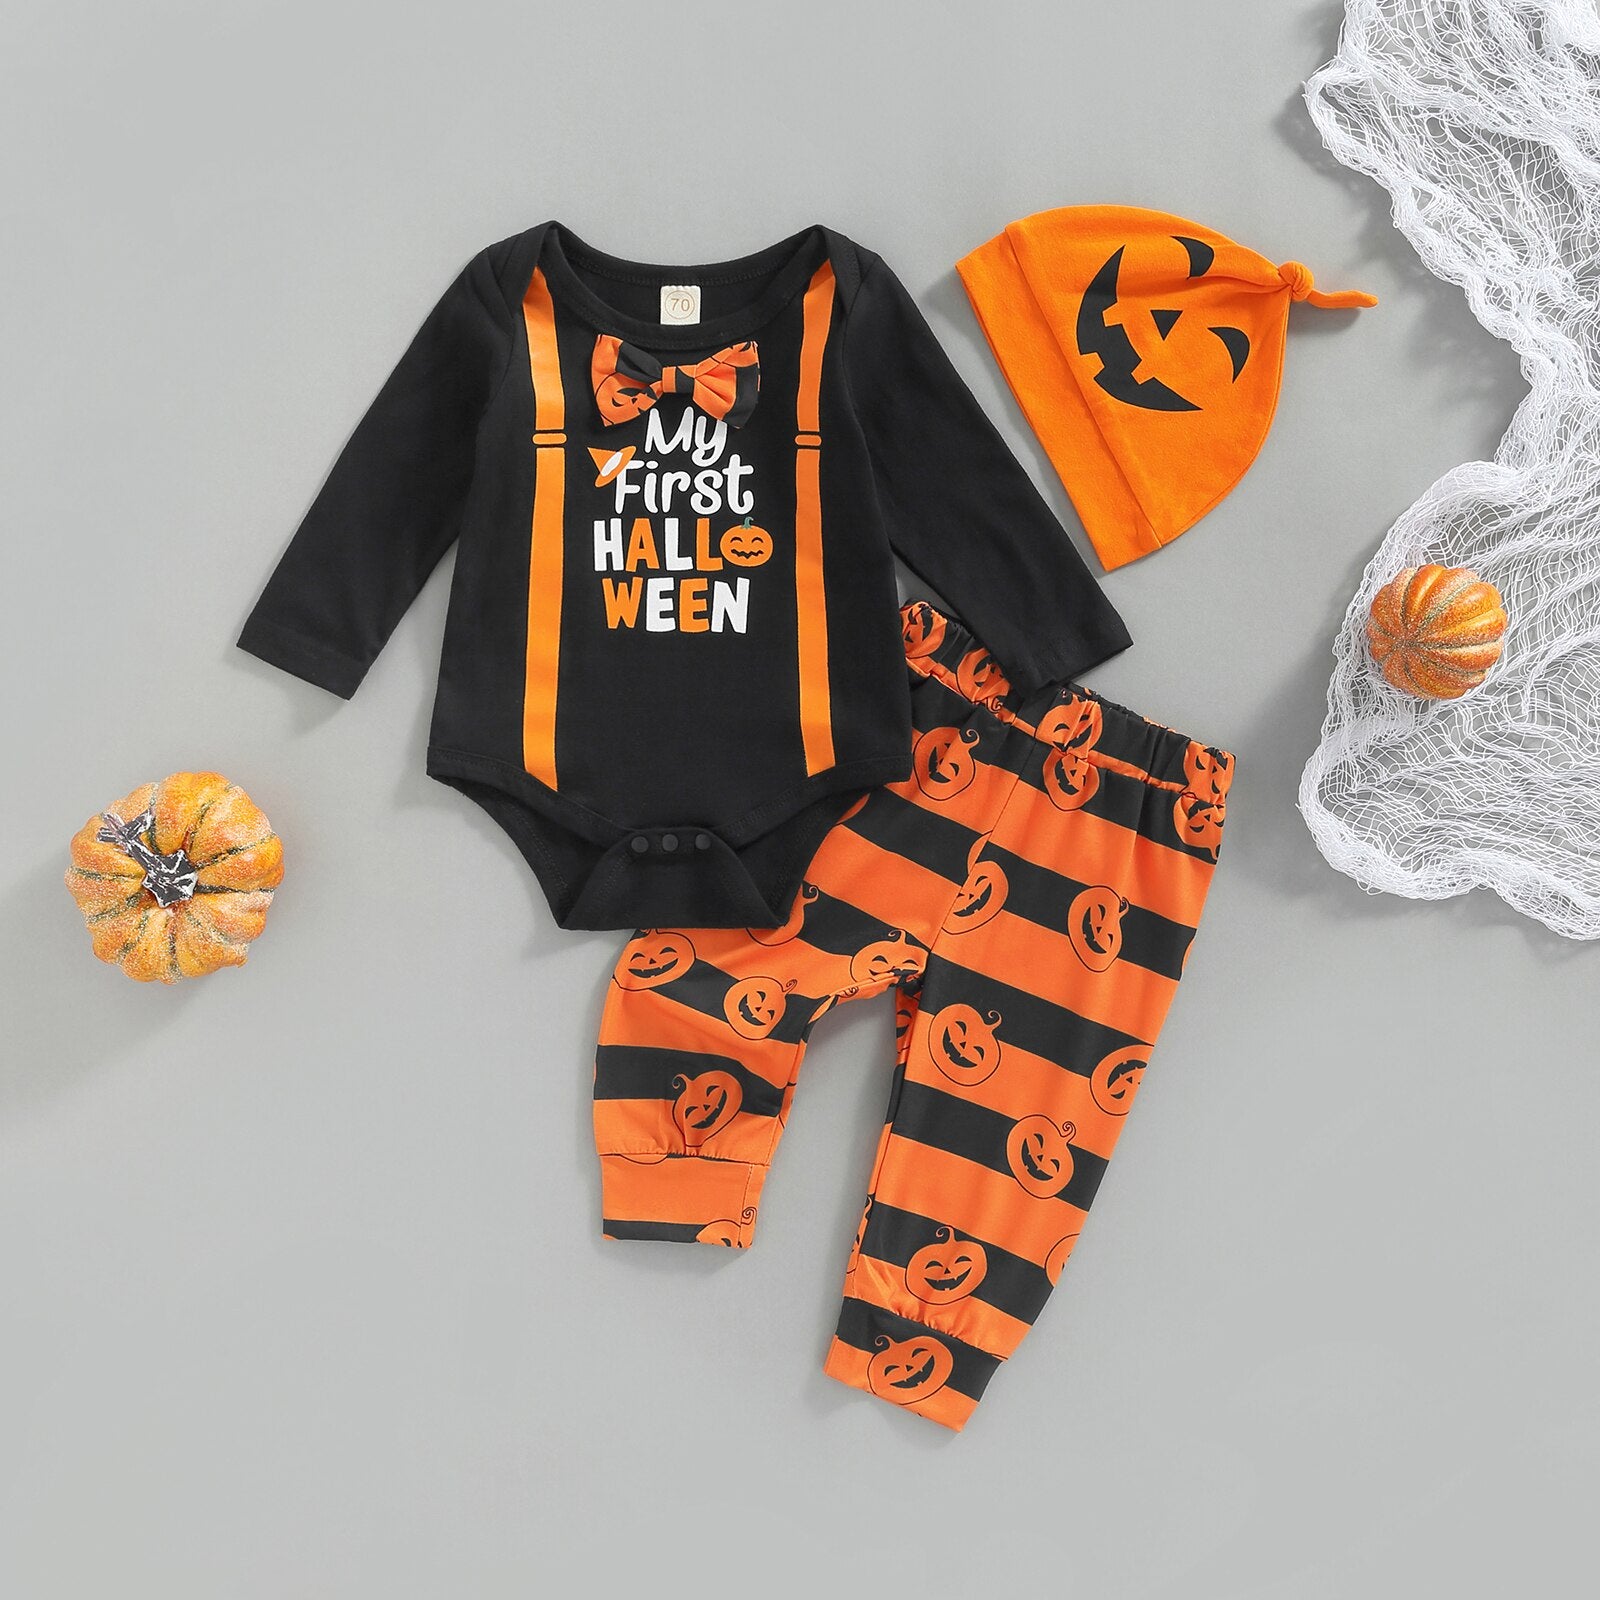 Adorable Halloween Newborn Baby Clothing Set